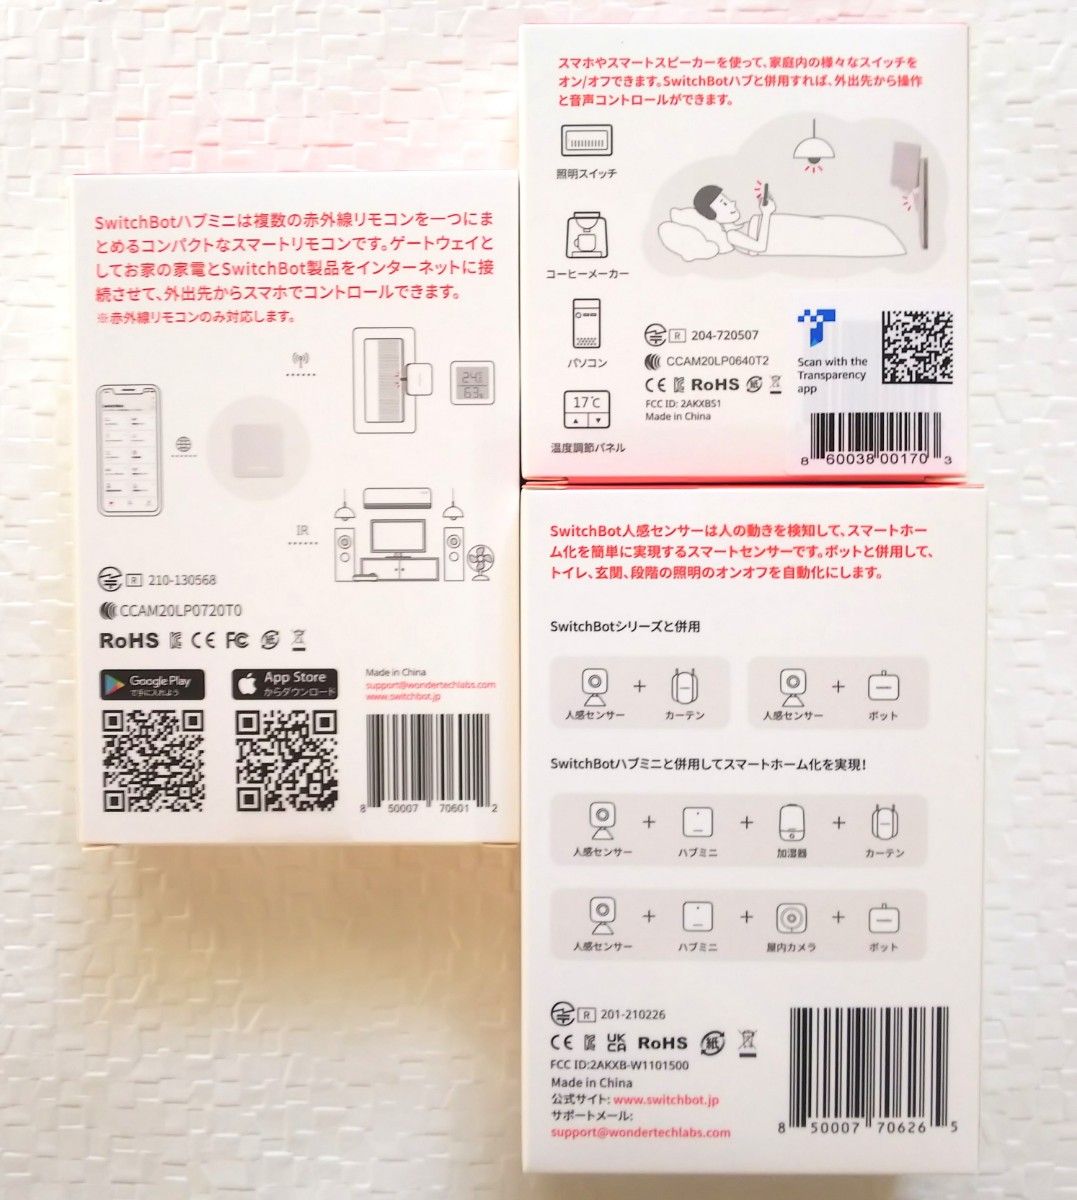 switchbot ハブミニ + ボット×2 + 人感センサー